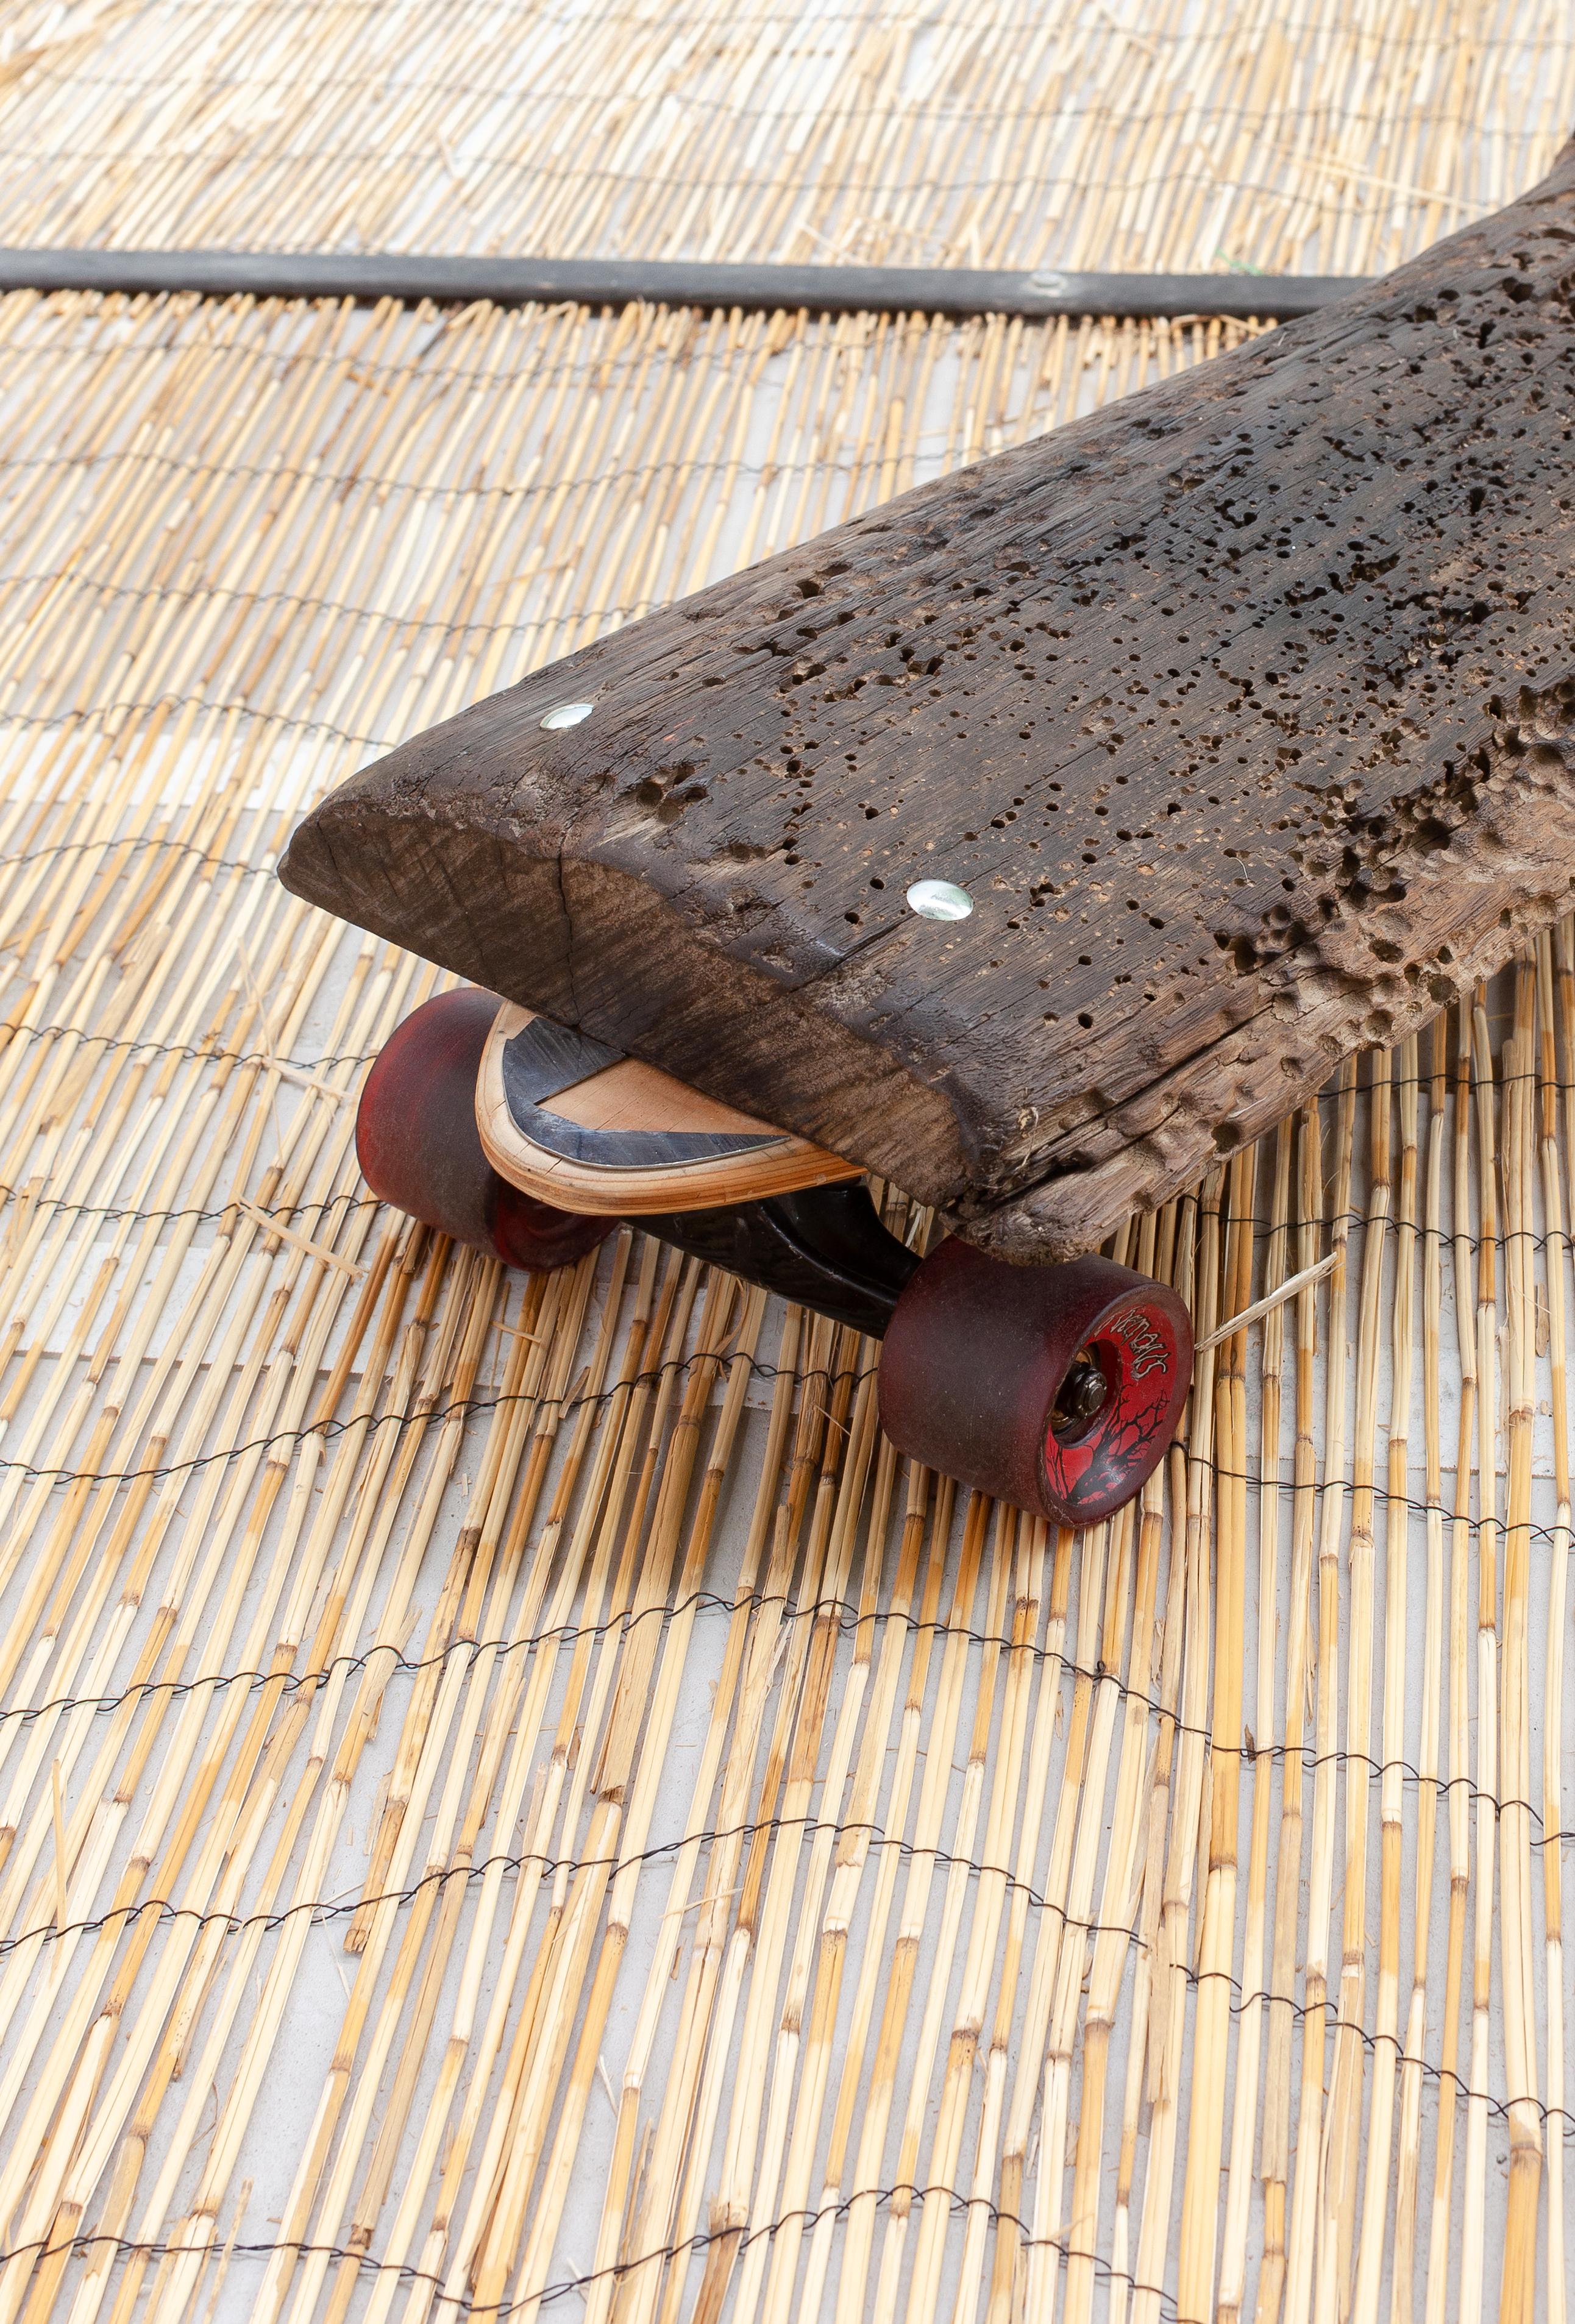 'Raw Skate’ Folding Seat with Skateboard Elements, Lionel Jadot, Belgium, 2020 9